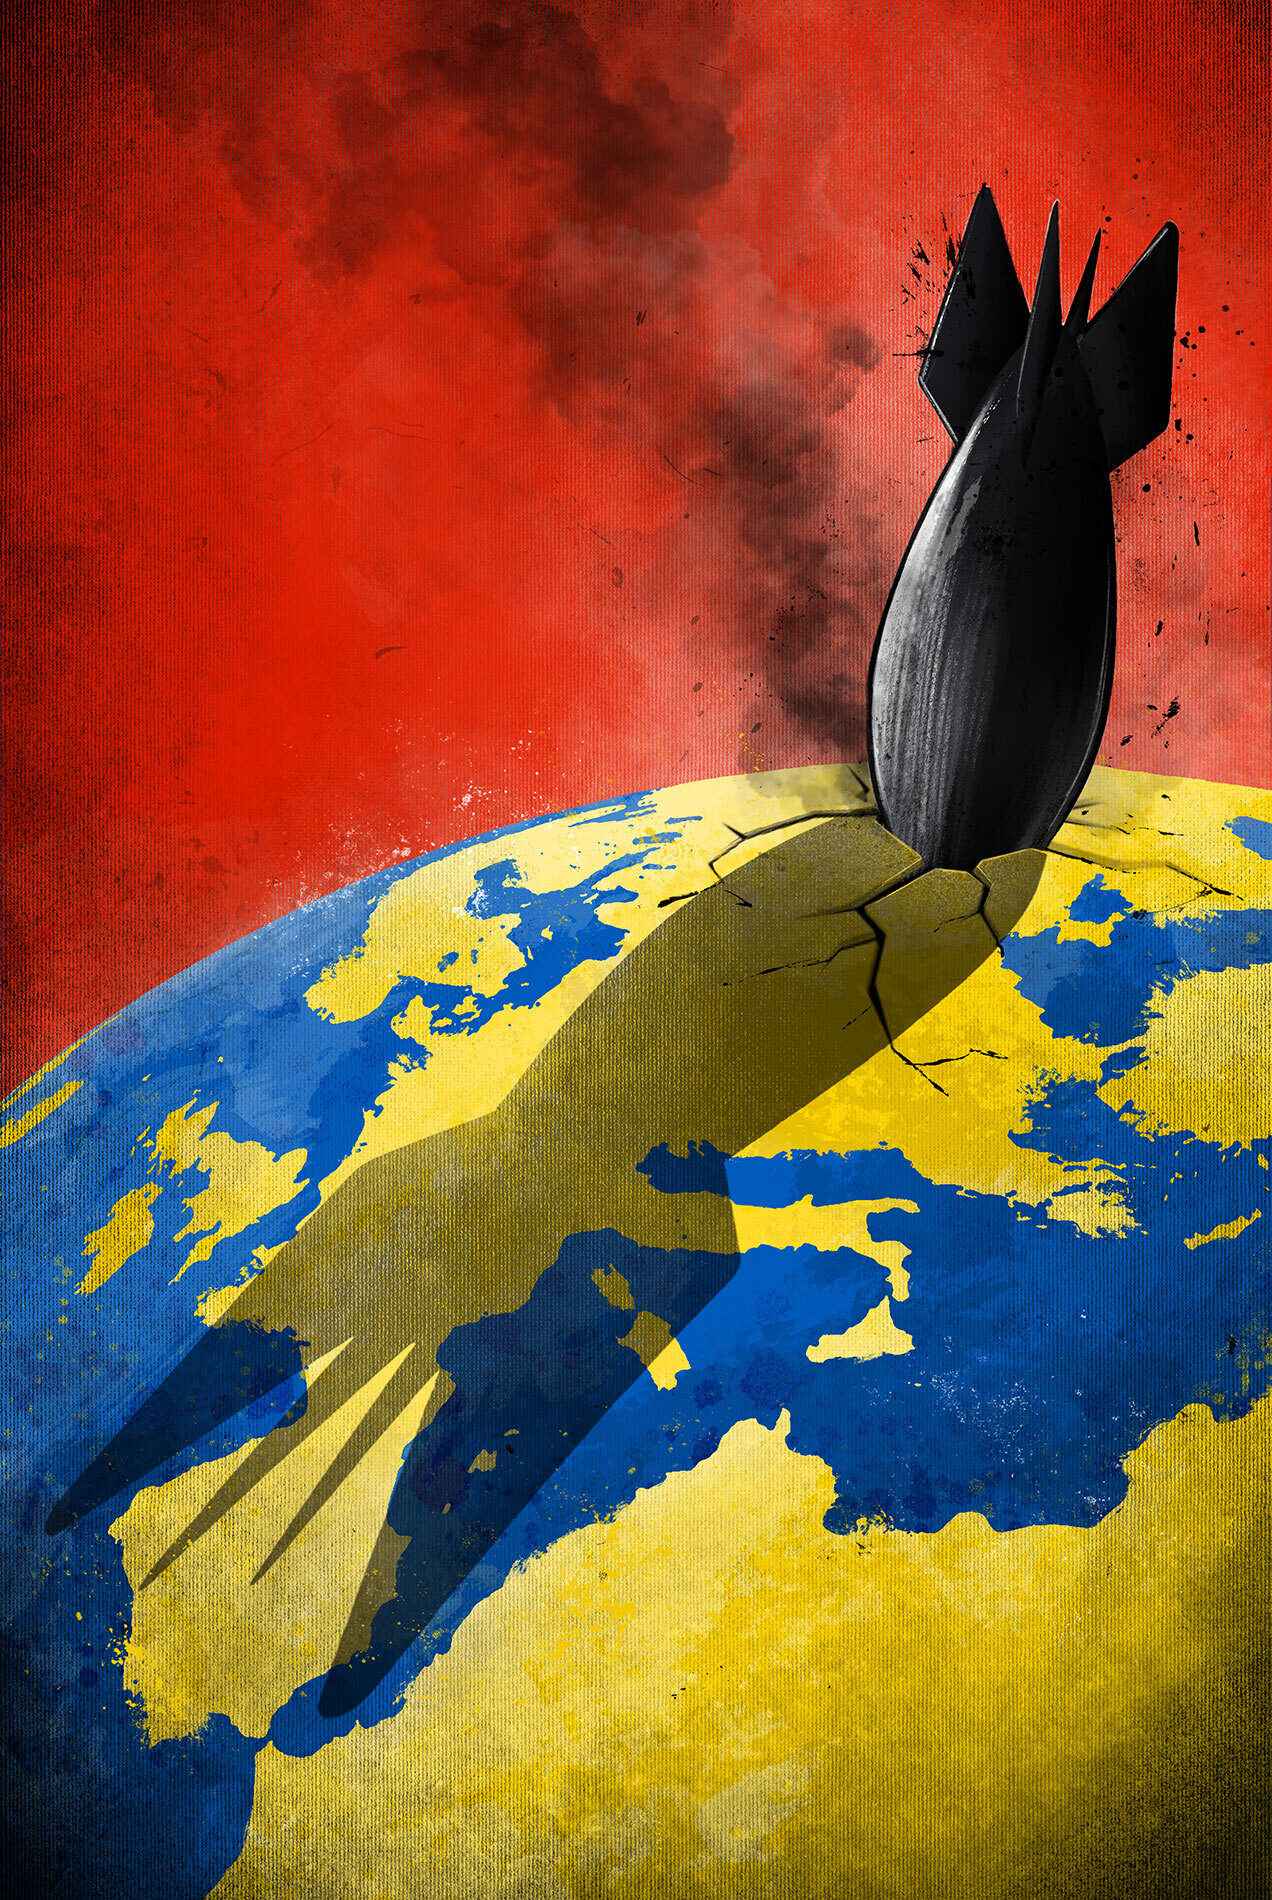 Ukraine europa europe krieg war shadow schatten editorial illustration conceptual russia russland bomb bombe peace - Kornel Illustration | Kornel Stadler portfolio